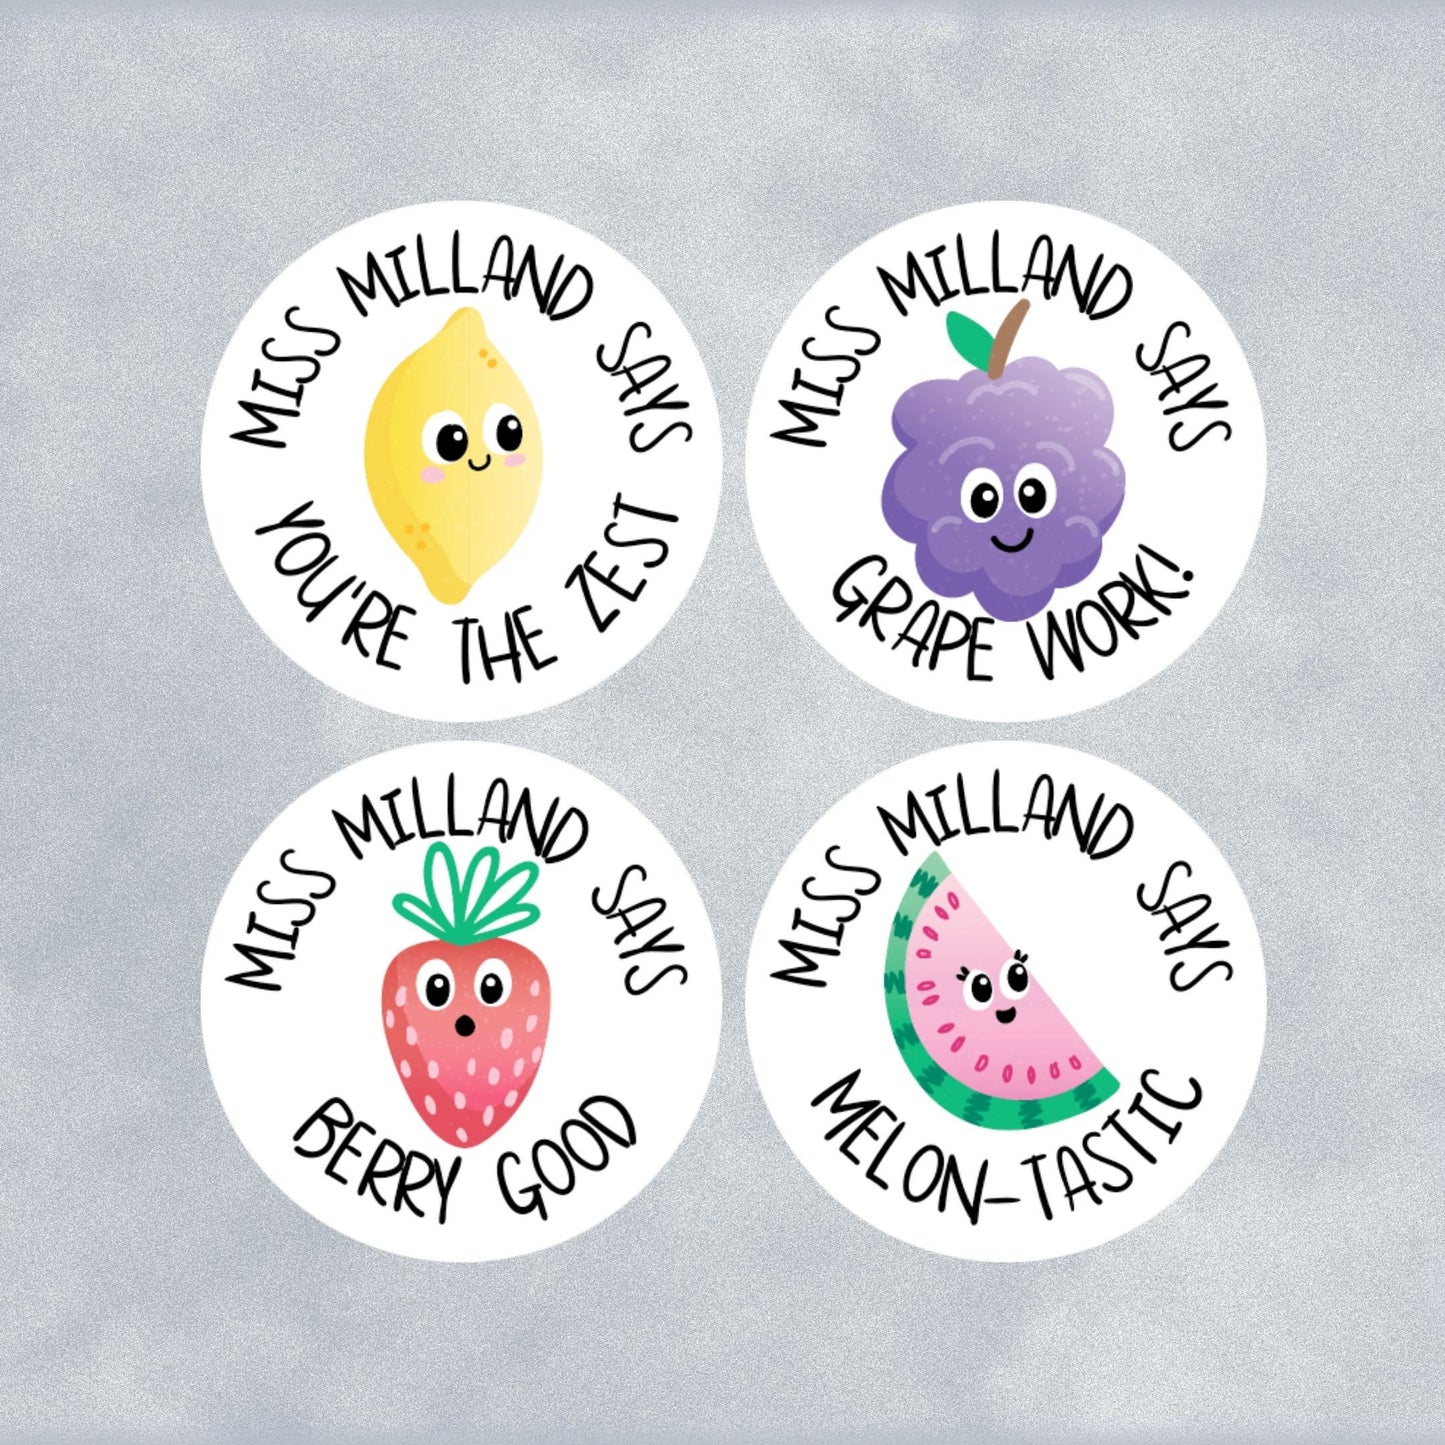 Fruit Custom Personalised Teacher Stickers